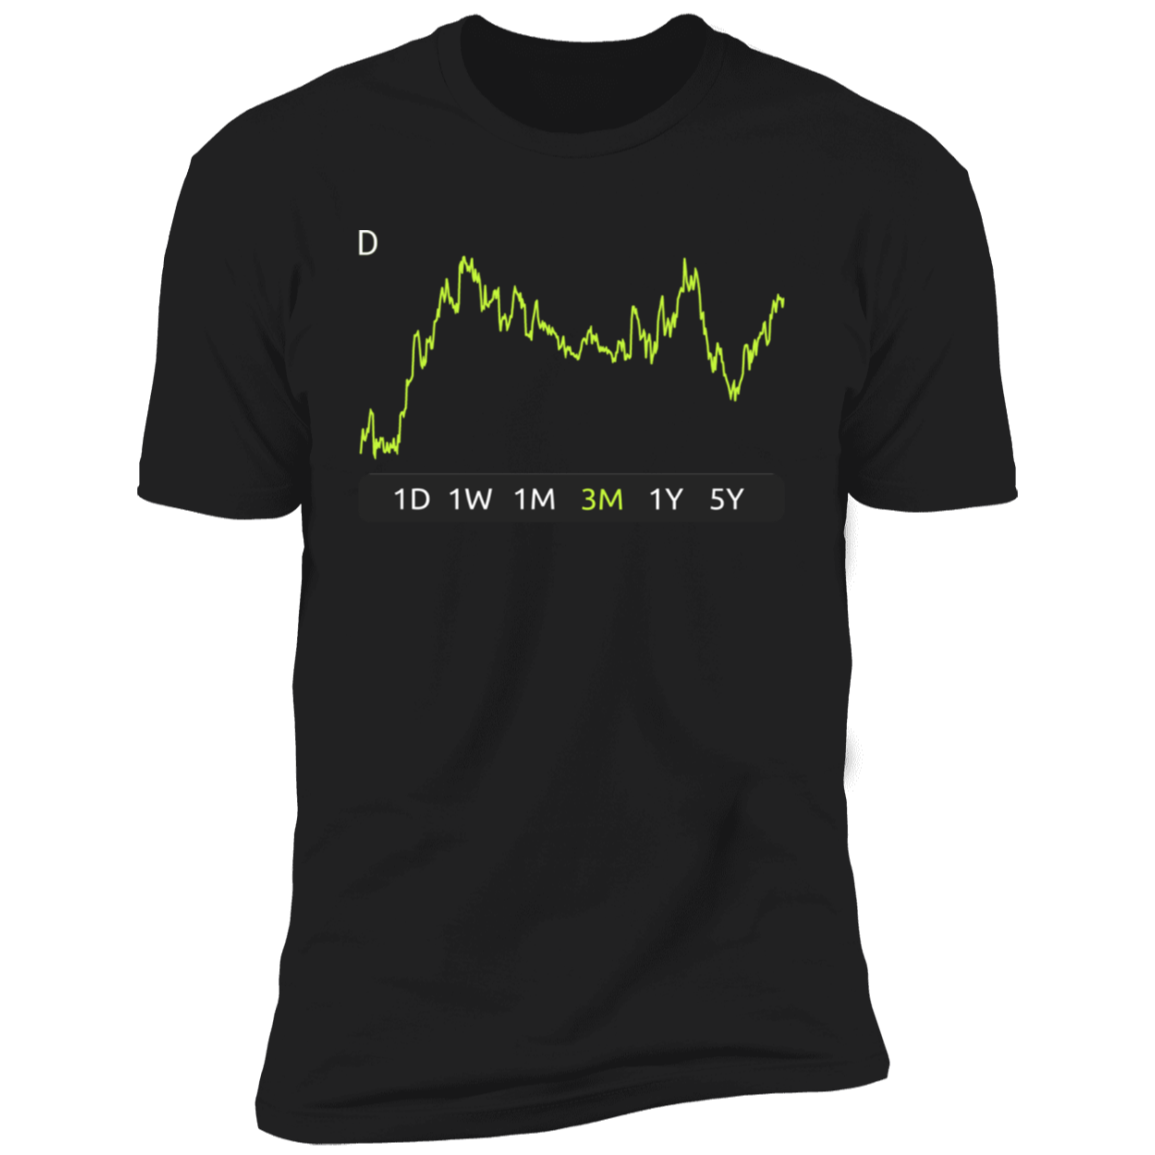 D Stock 3m Premium T-Shirt